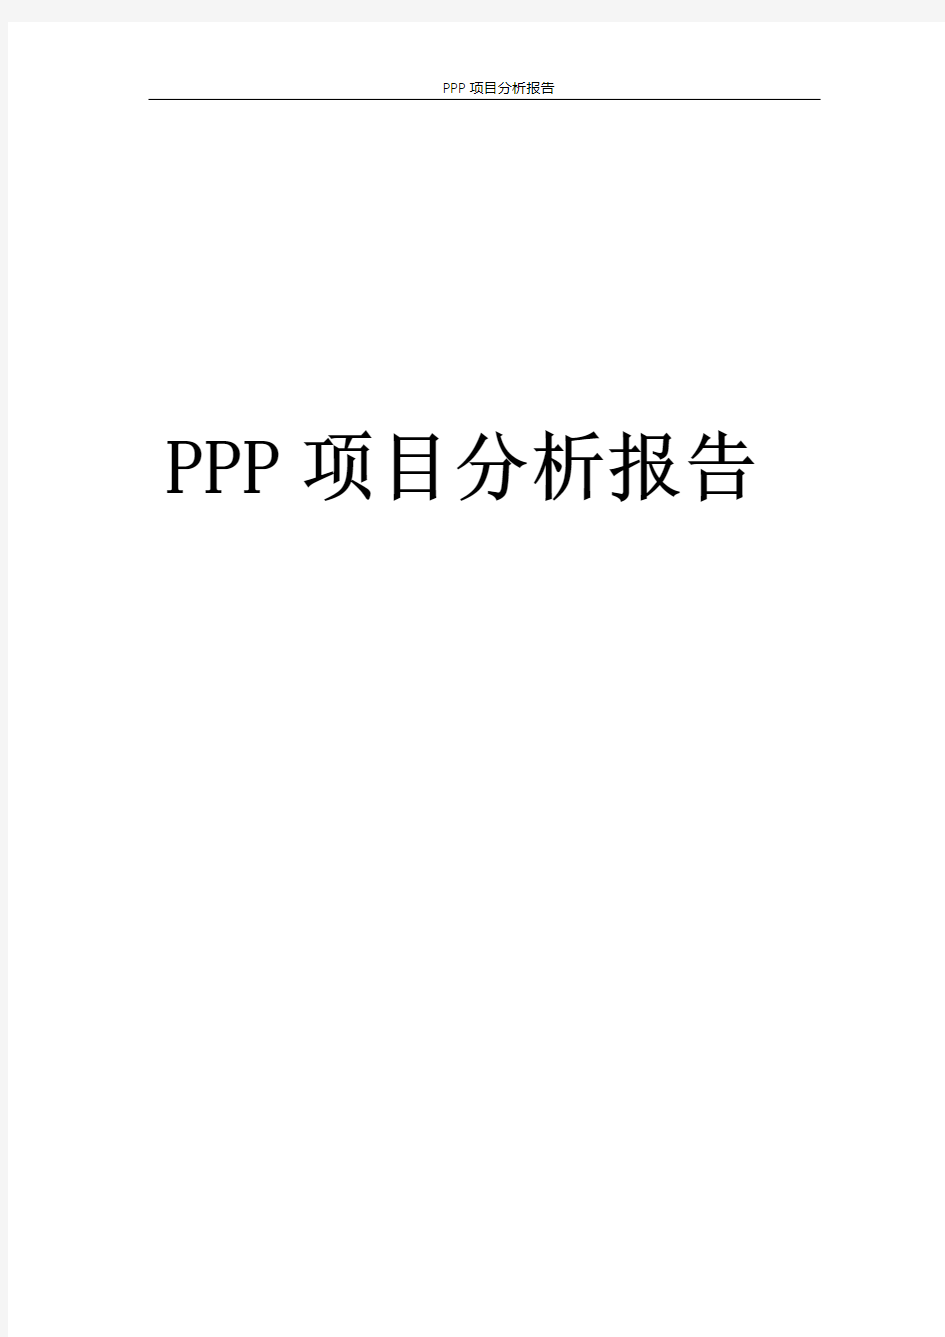 PPP项目分析报告